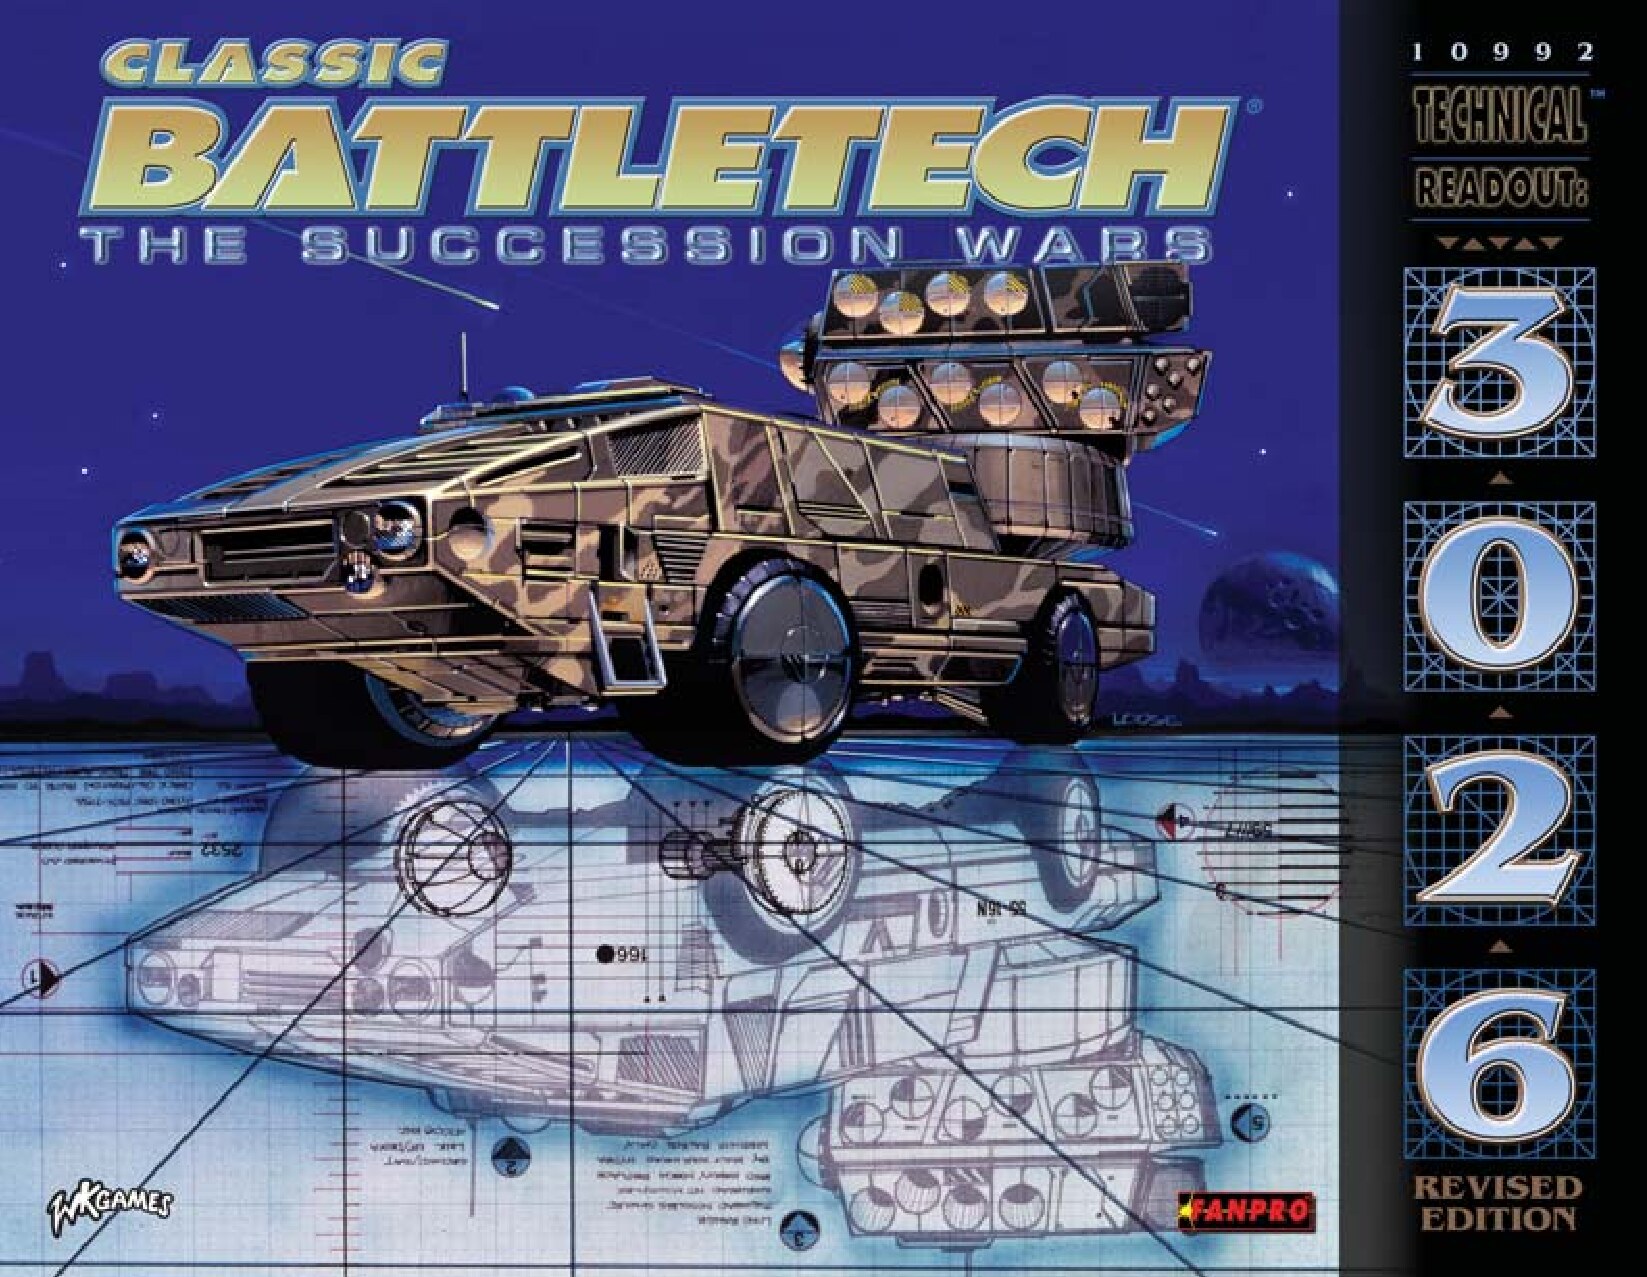 Classic Battletech Technical Readout 3026 Revised